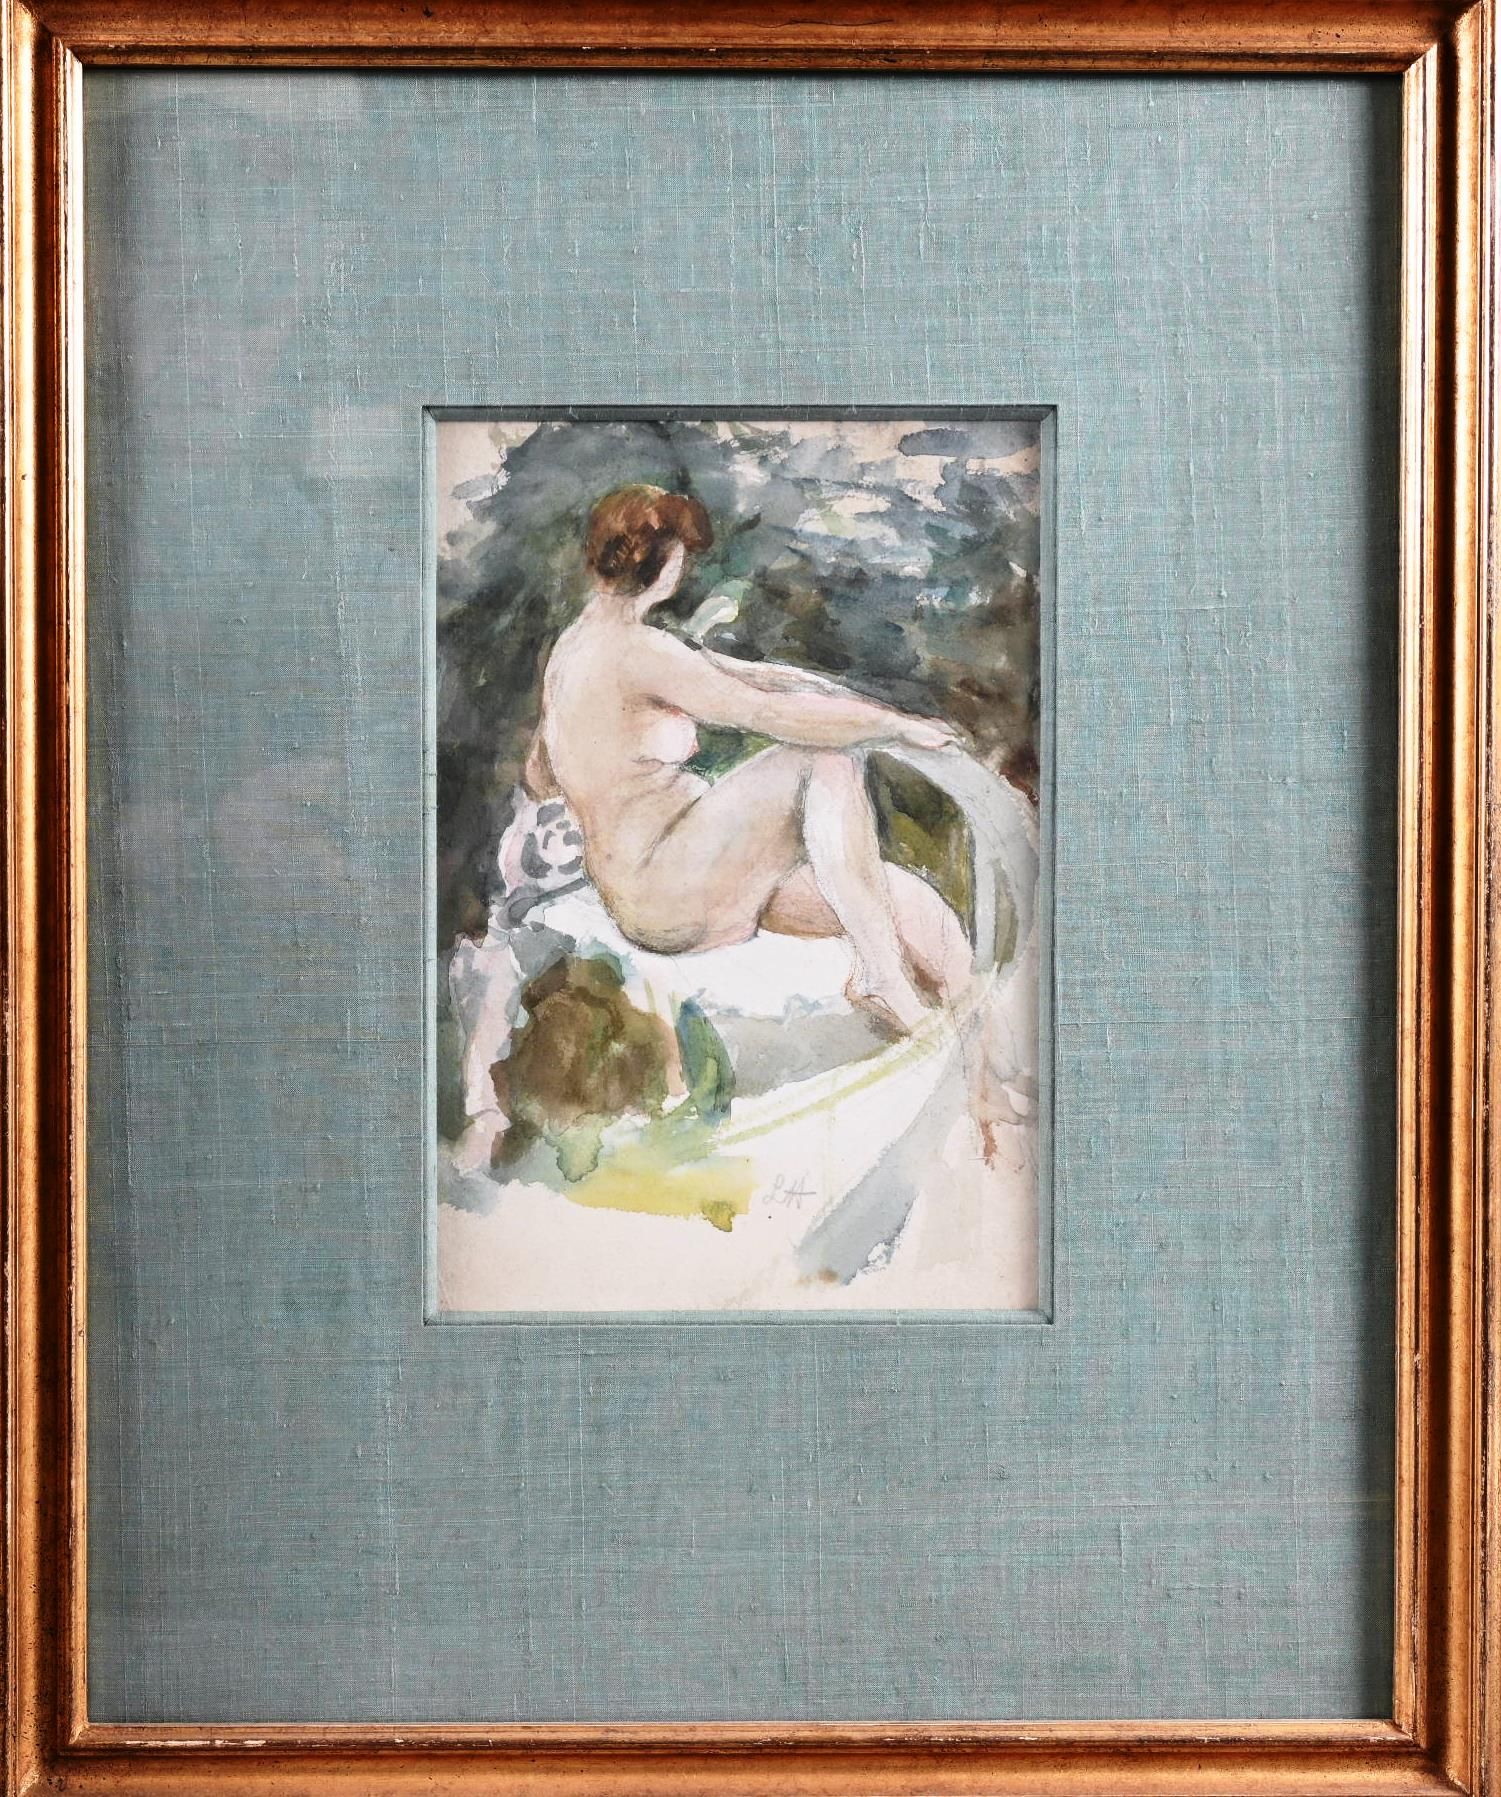 Léon HOUYOUX aquarelle Léon HOUYOUX (1856 - 1940)

"Mujer desnuda en un banco".
&hellip;